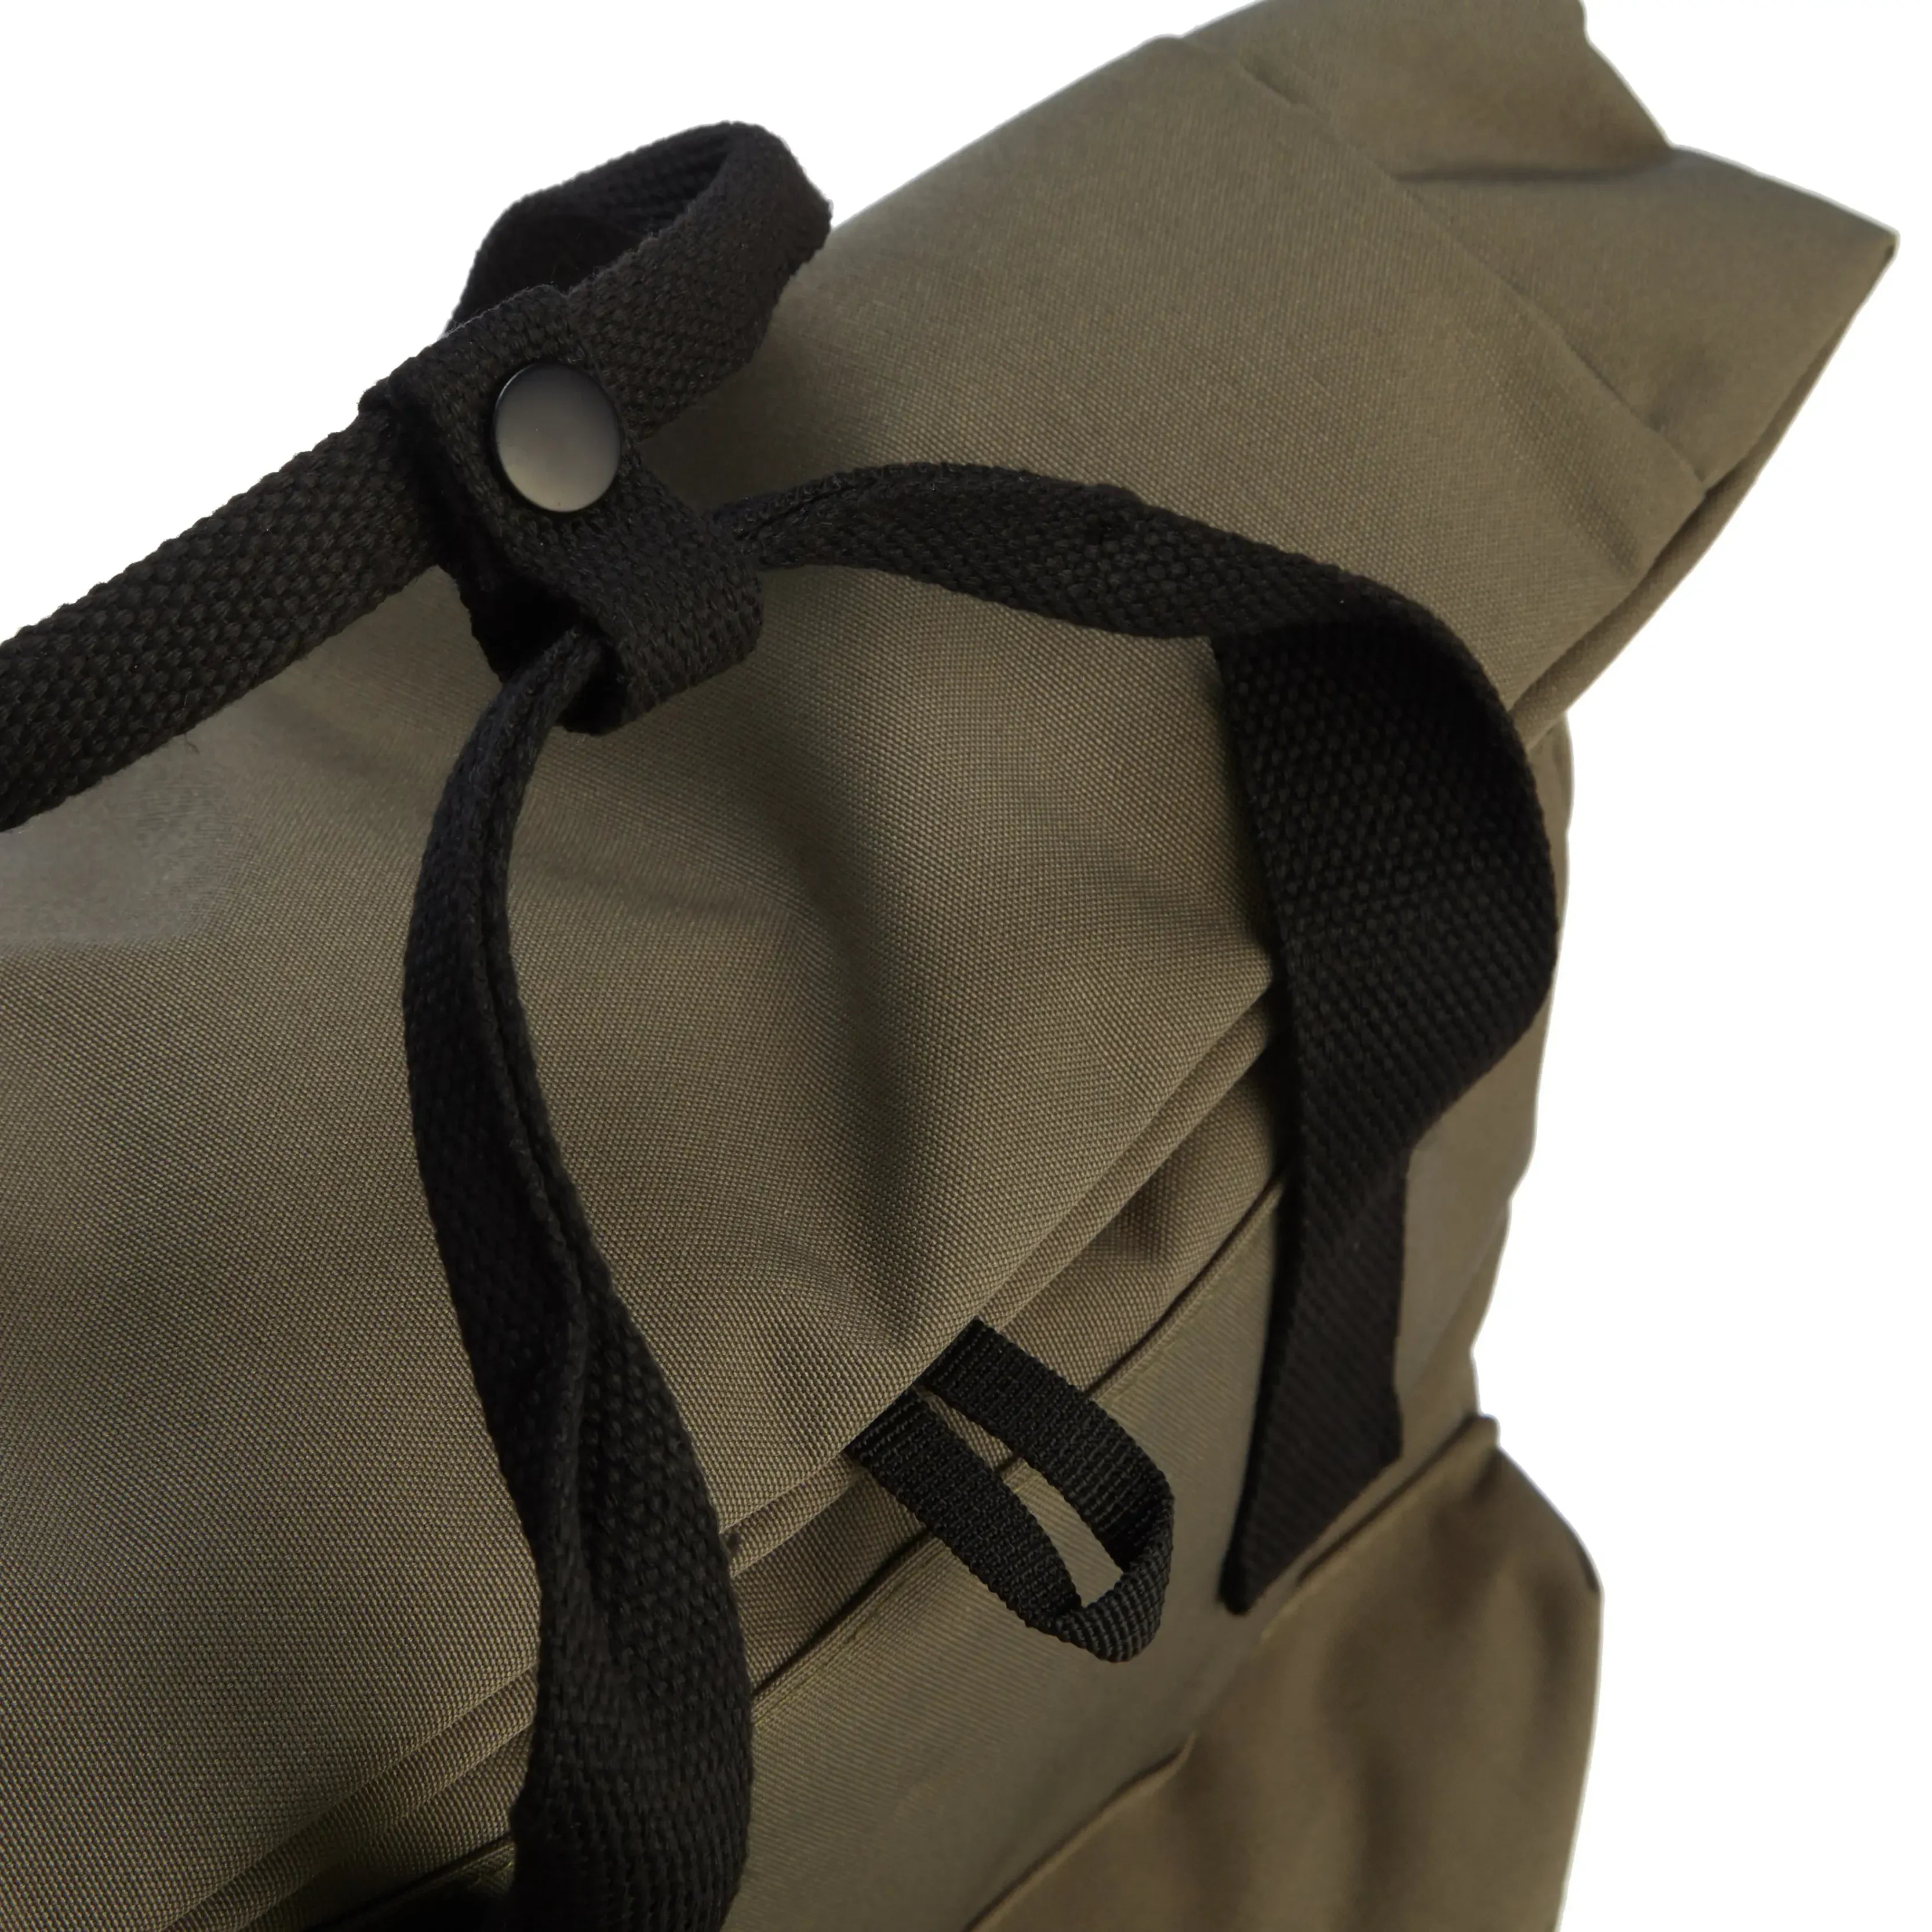 koffer-direkt.de Leisure backpack 42 cm - dark blue